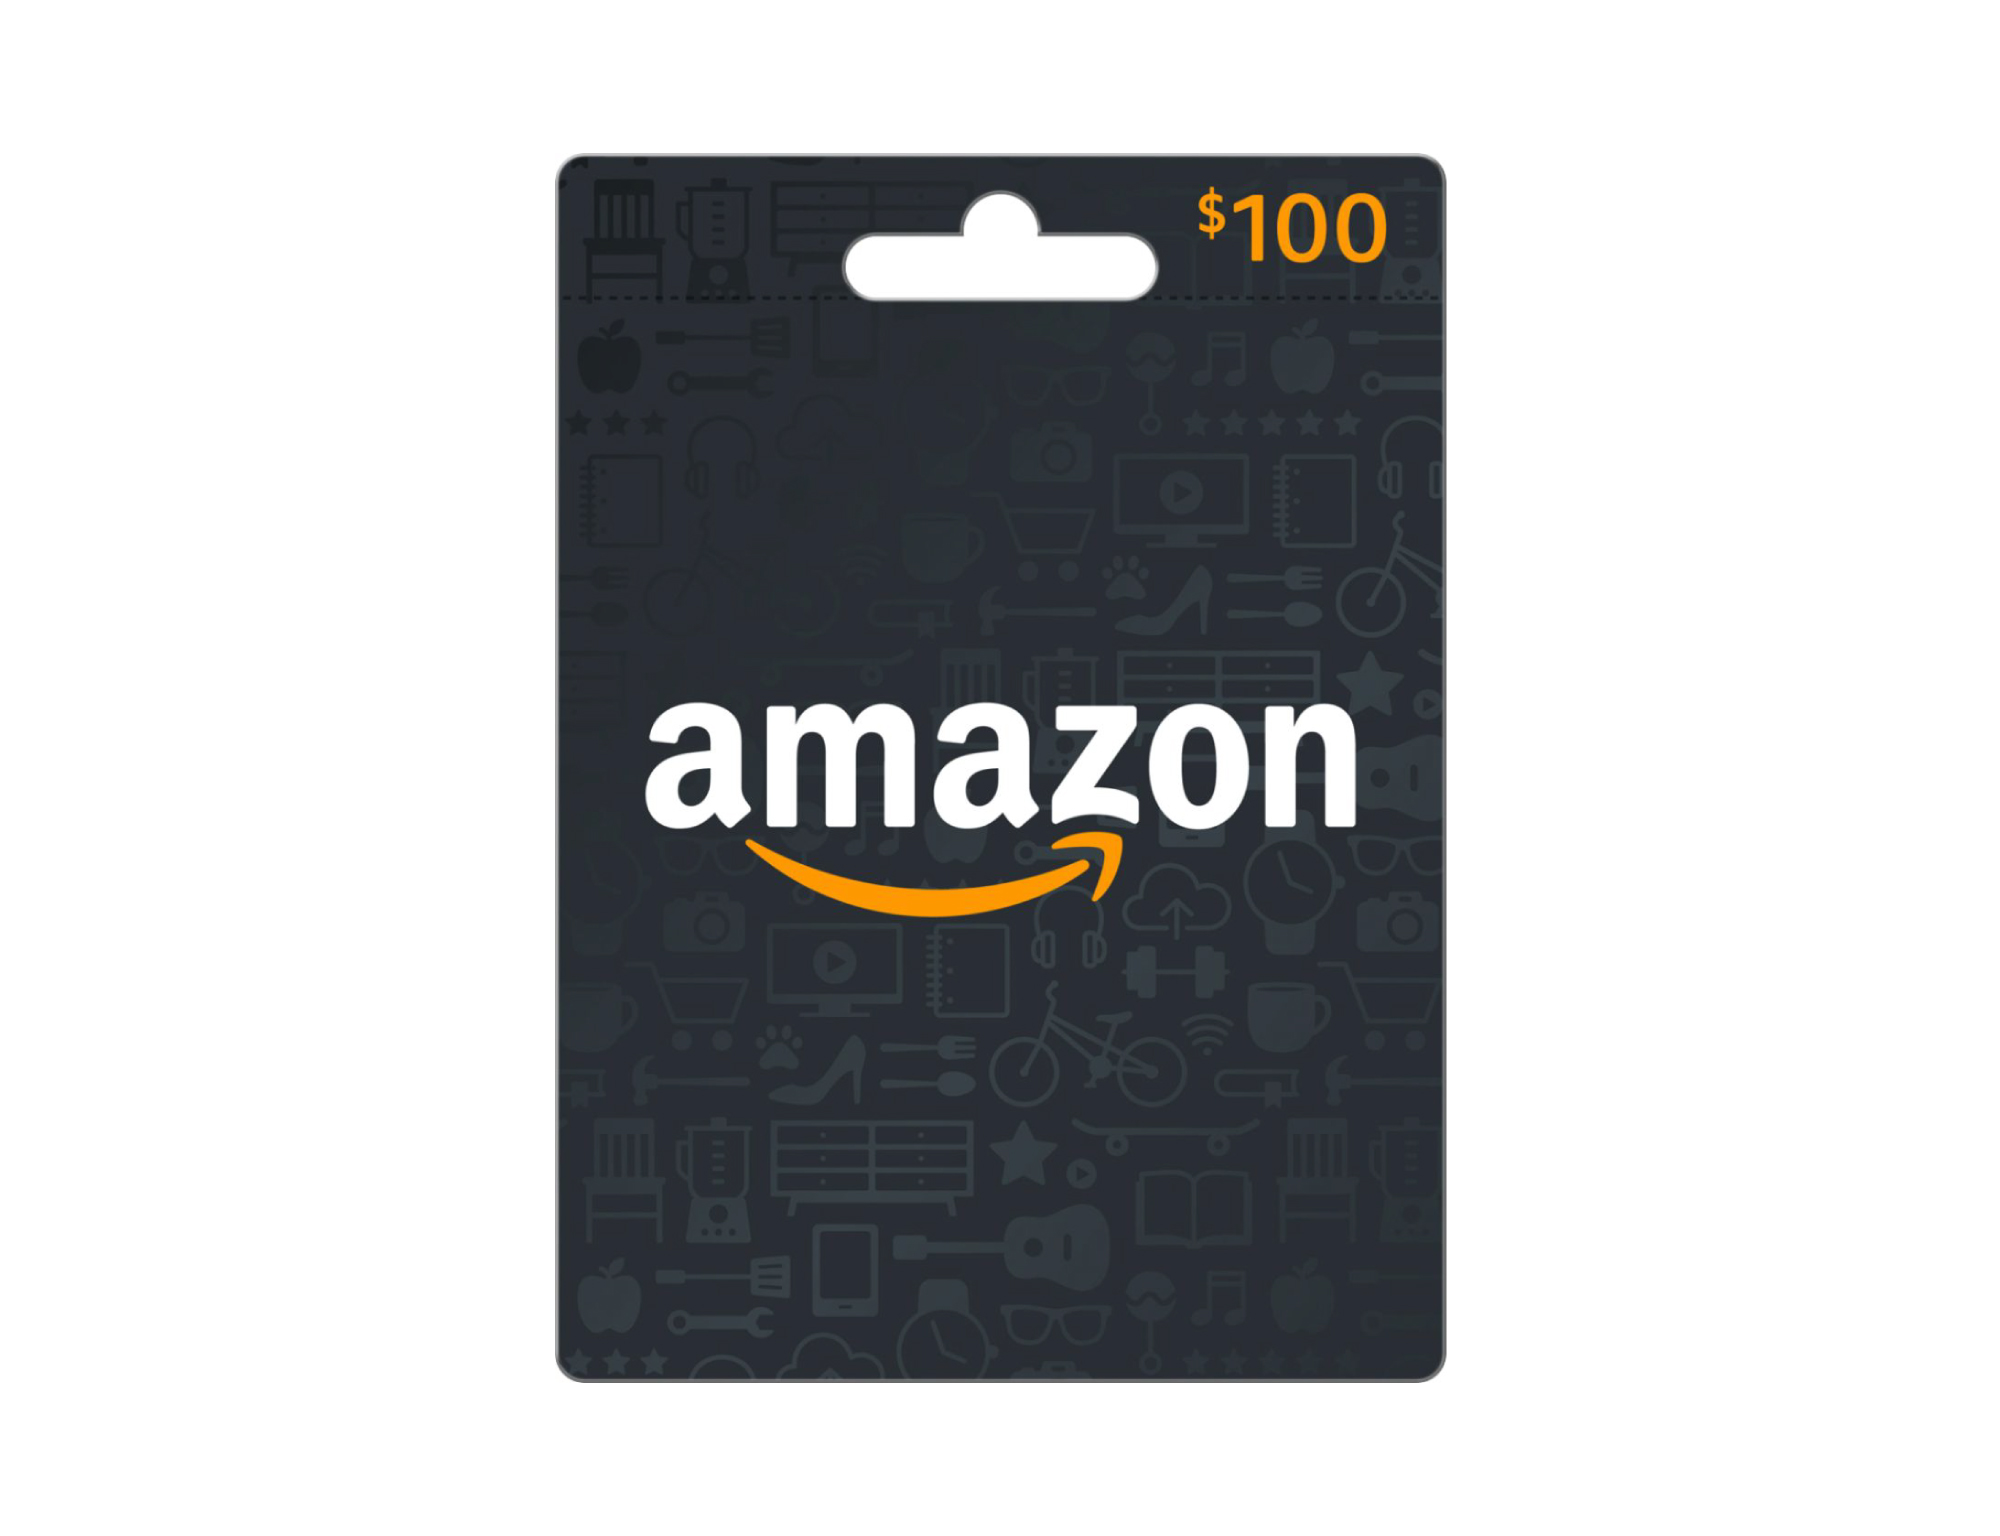 buy amazon gift card using bitcoin